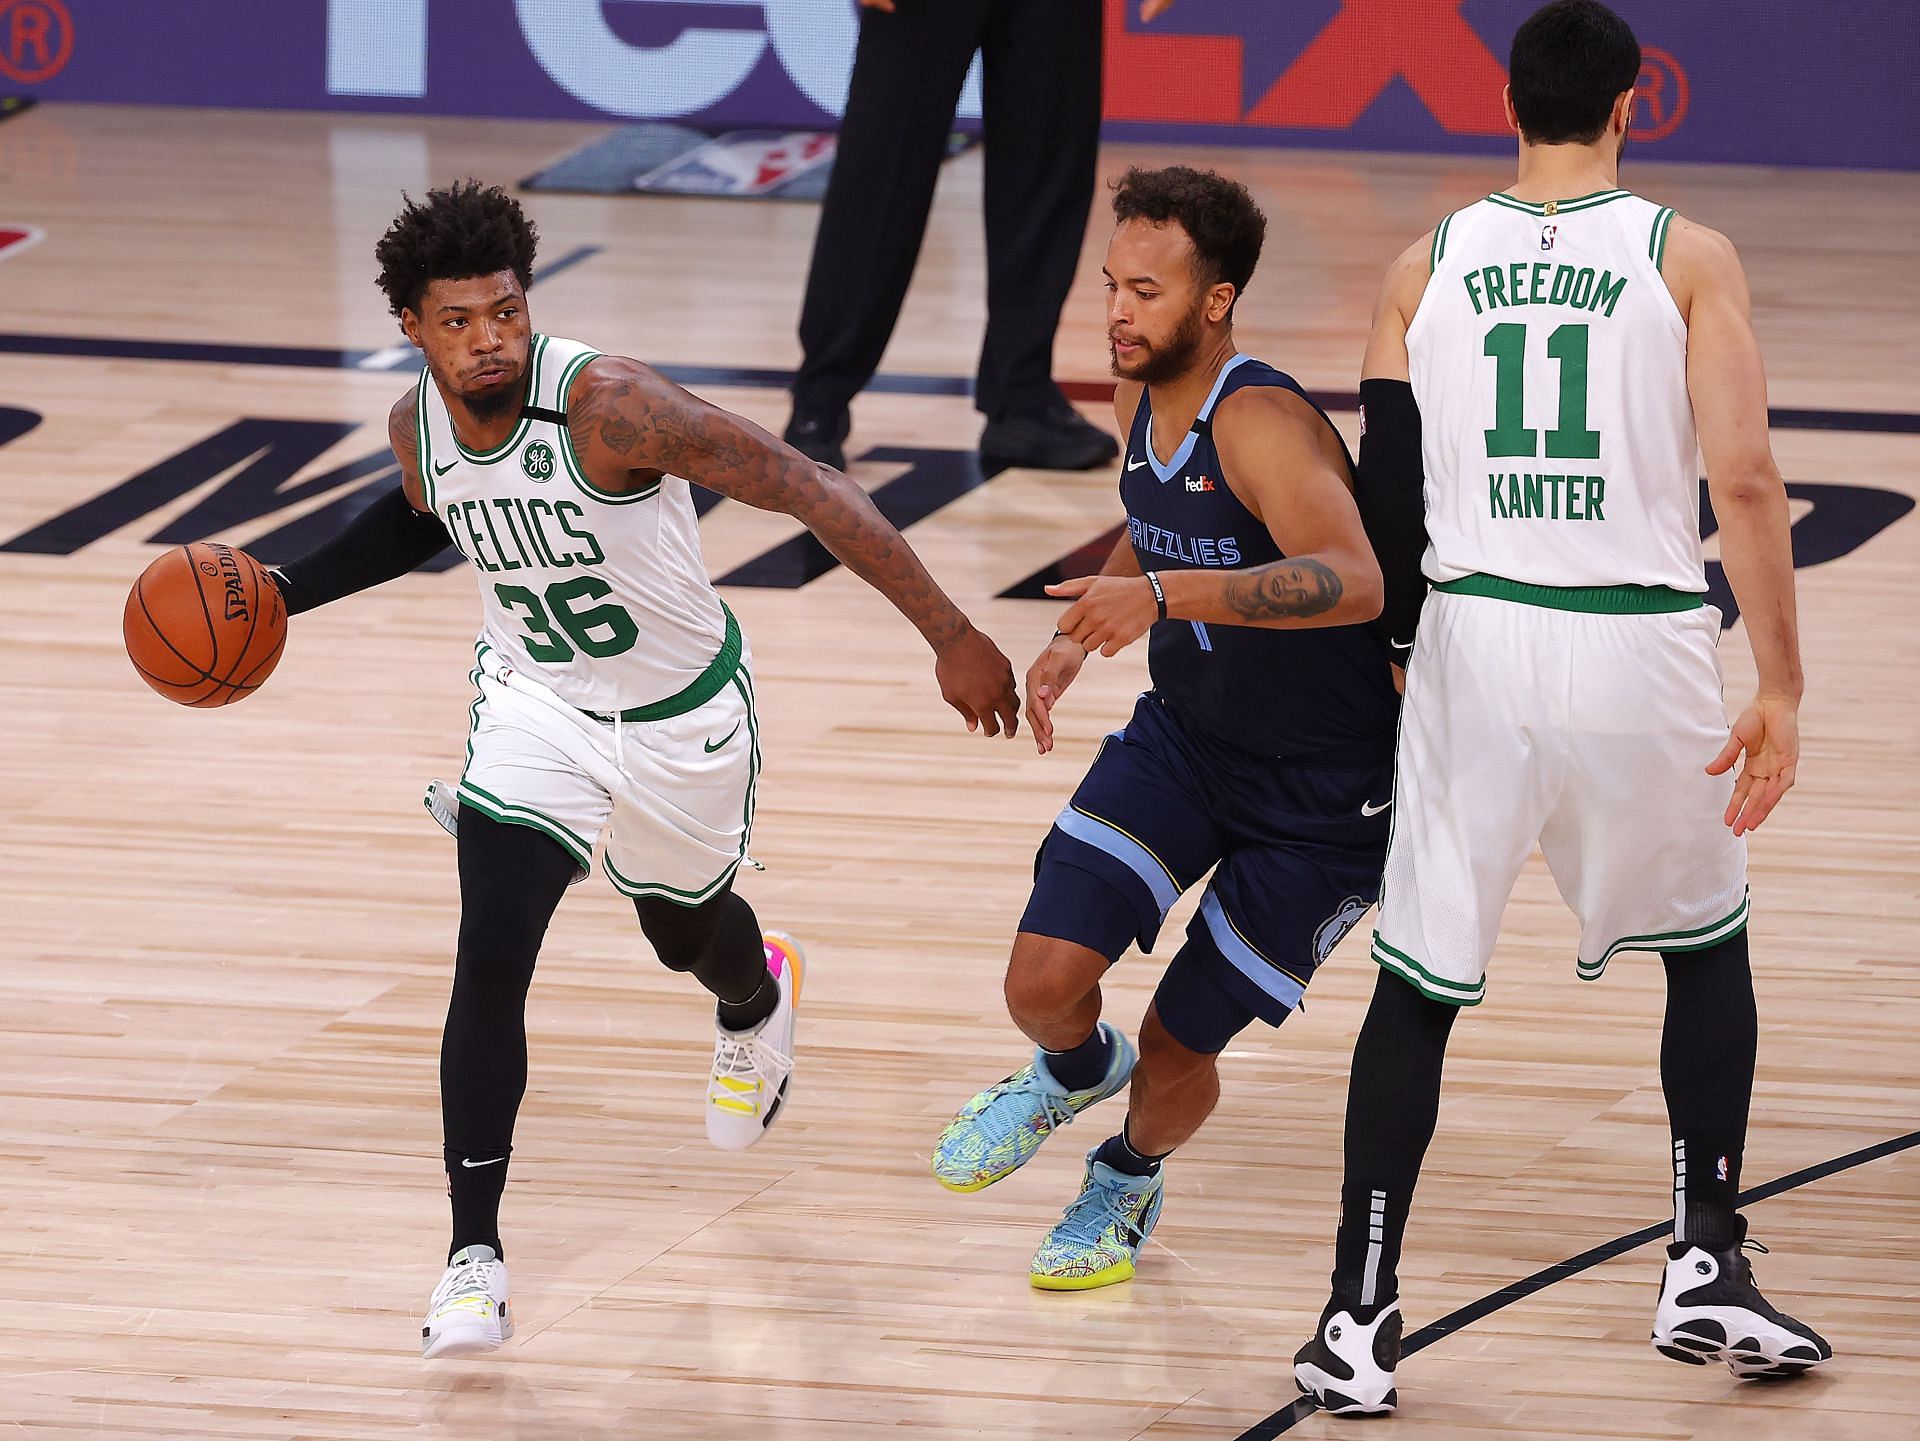 The Boston Celtics will host the Memphis Grizzlies on Mar. 3.